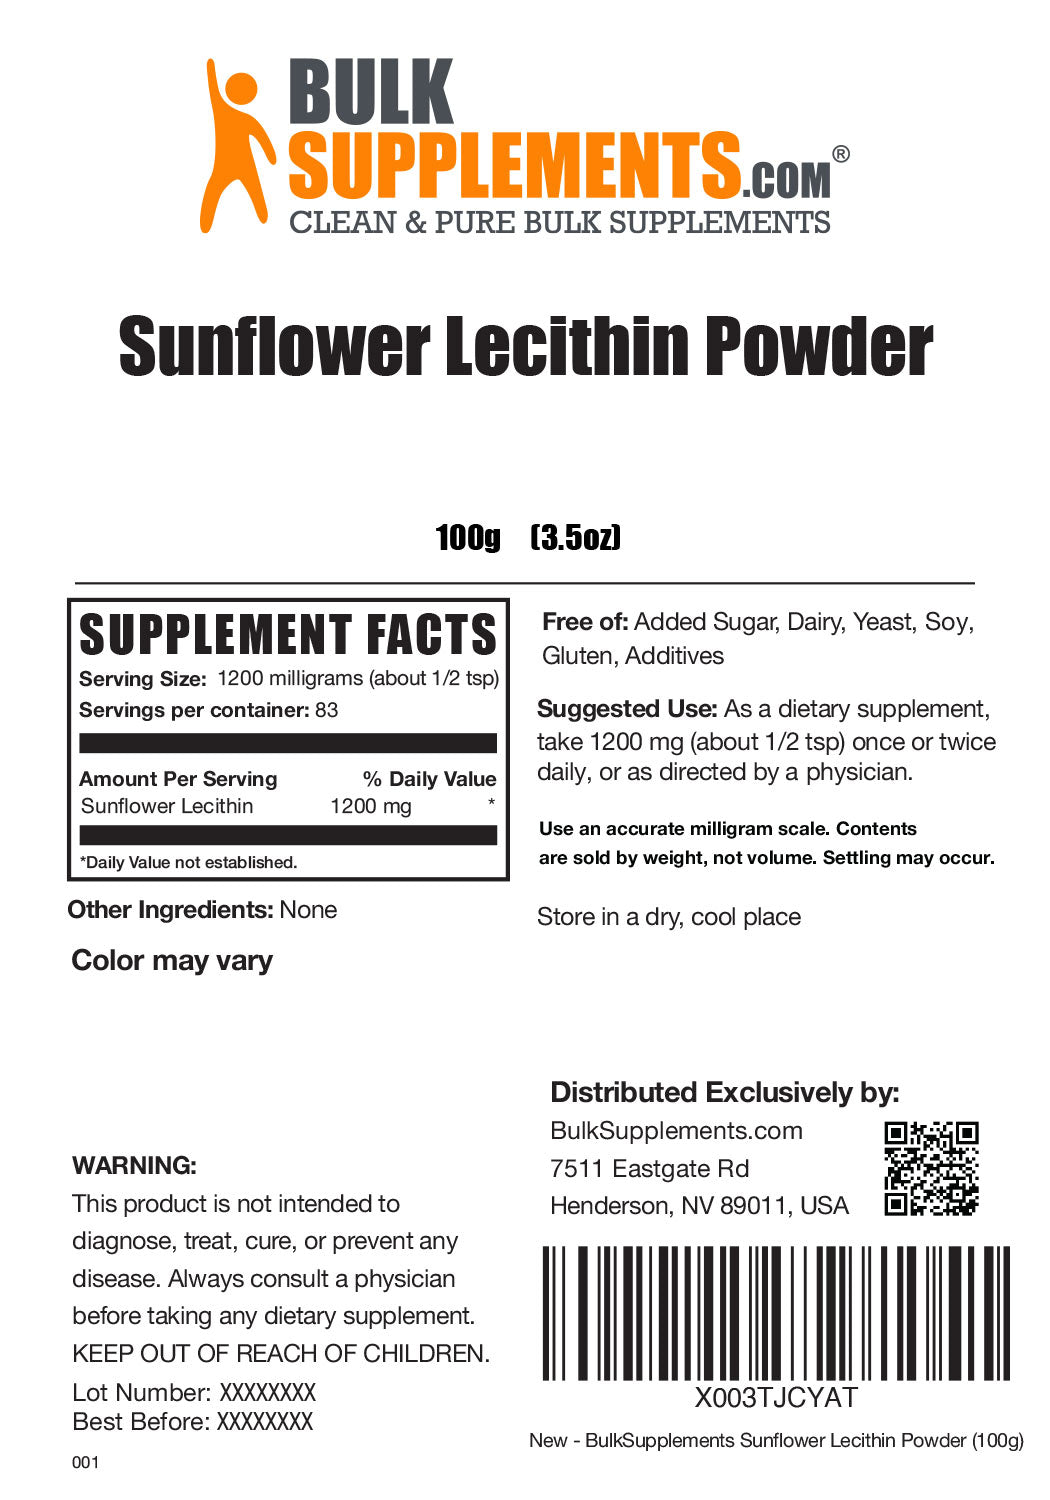 Sunflower Lecithin powder label 100g